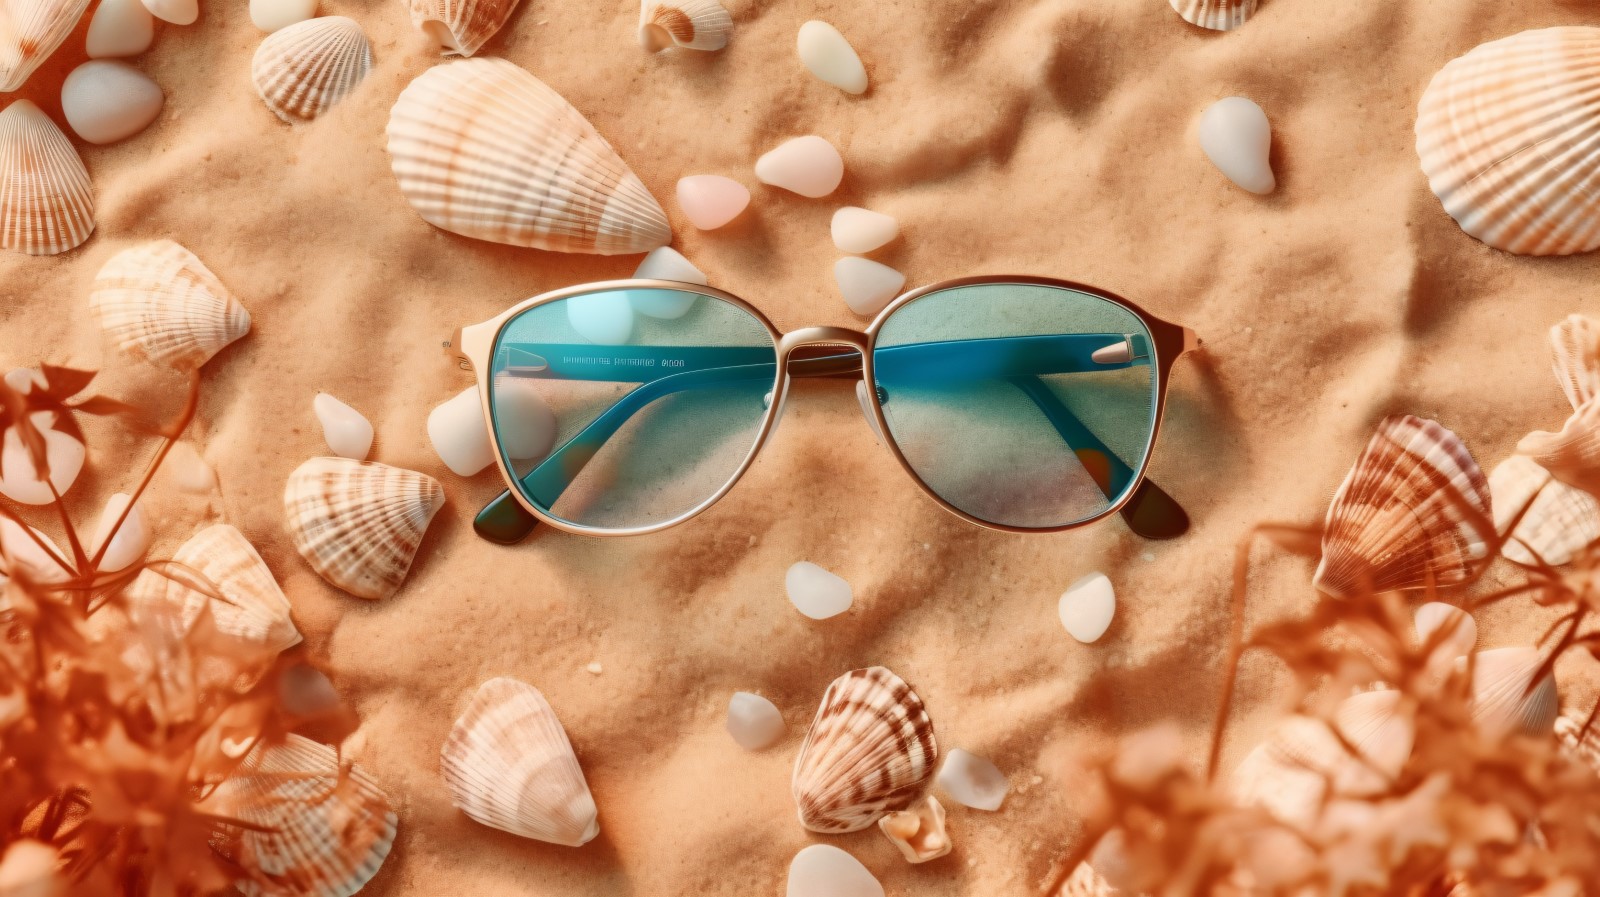 Sunglasses seashells and beach accessories on sandy beach 190